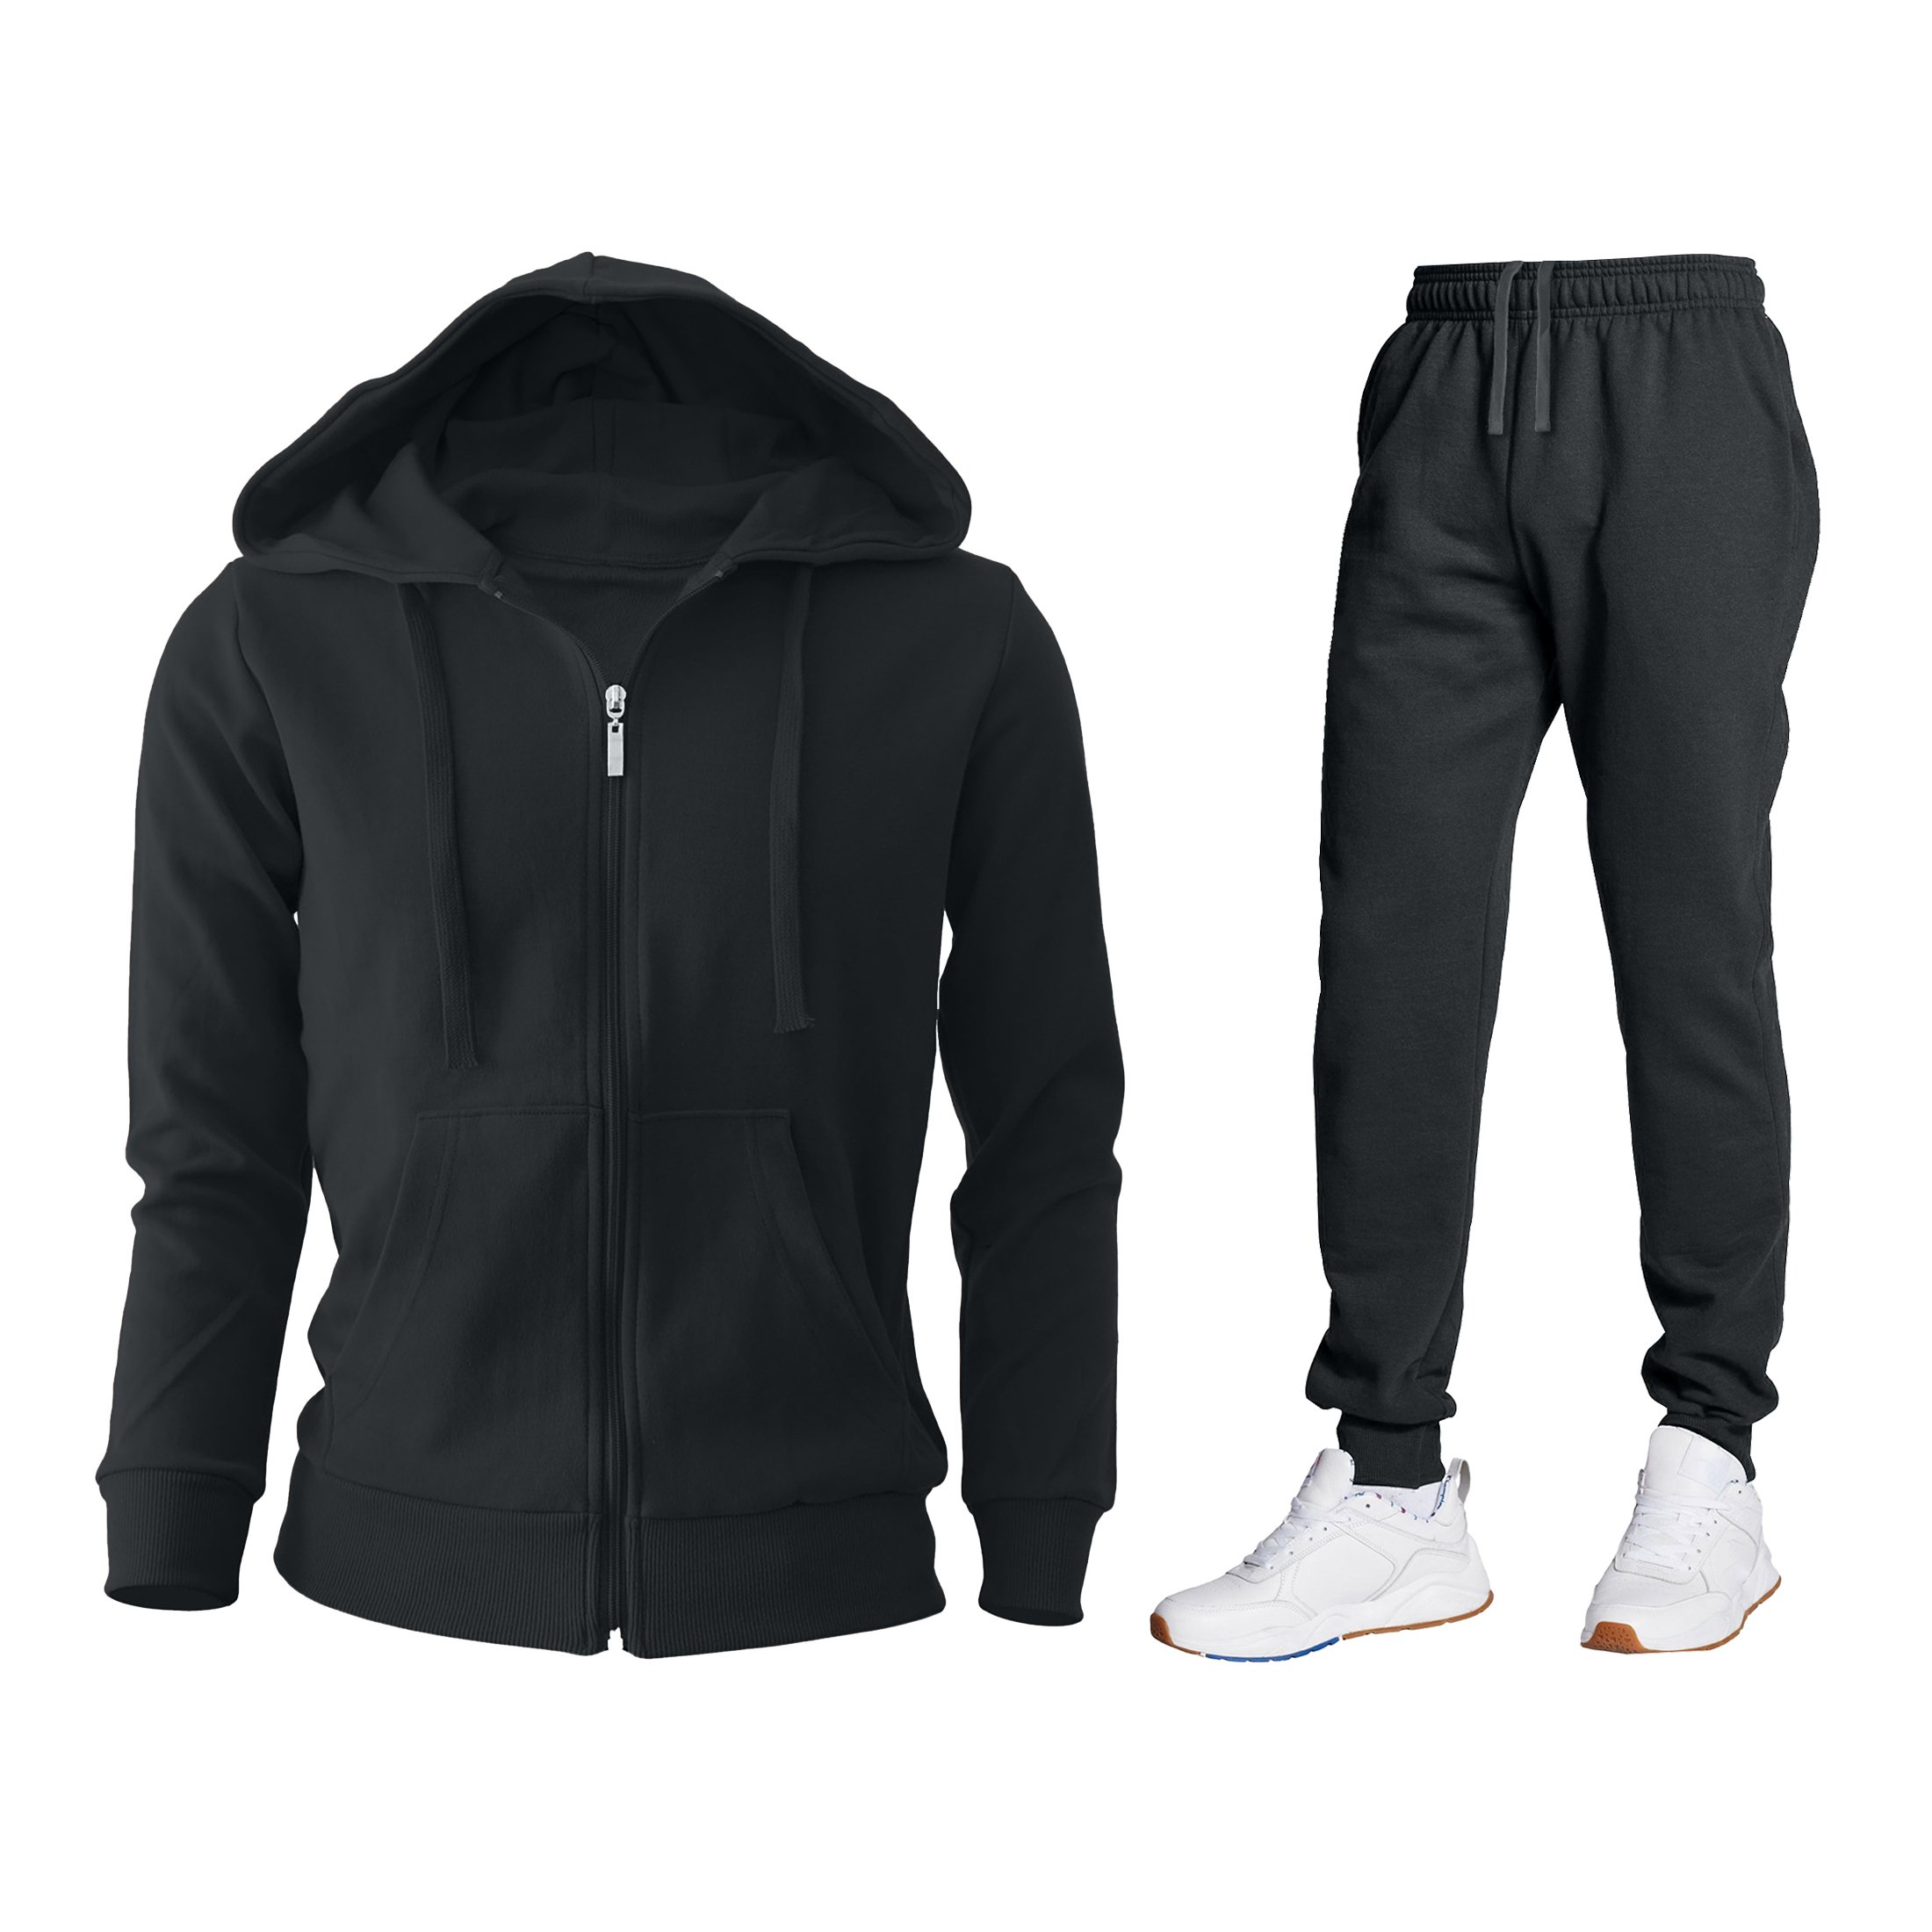 Men's Casual Jogging Suit Track Sports Zip Up Jogger Set - XL